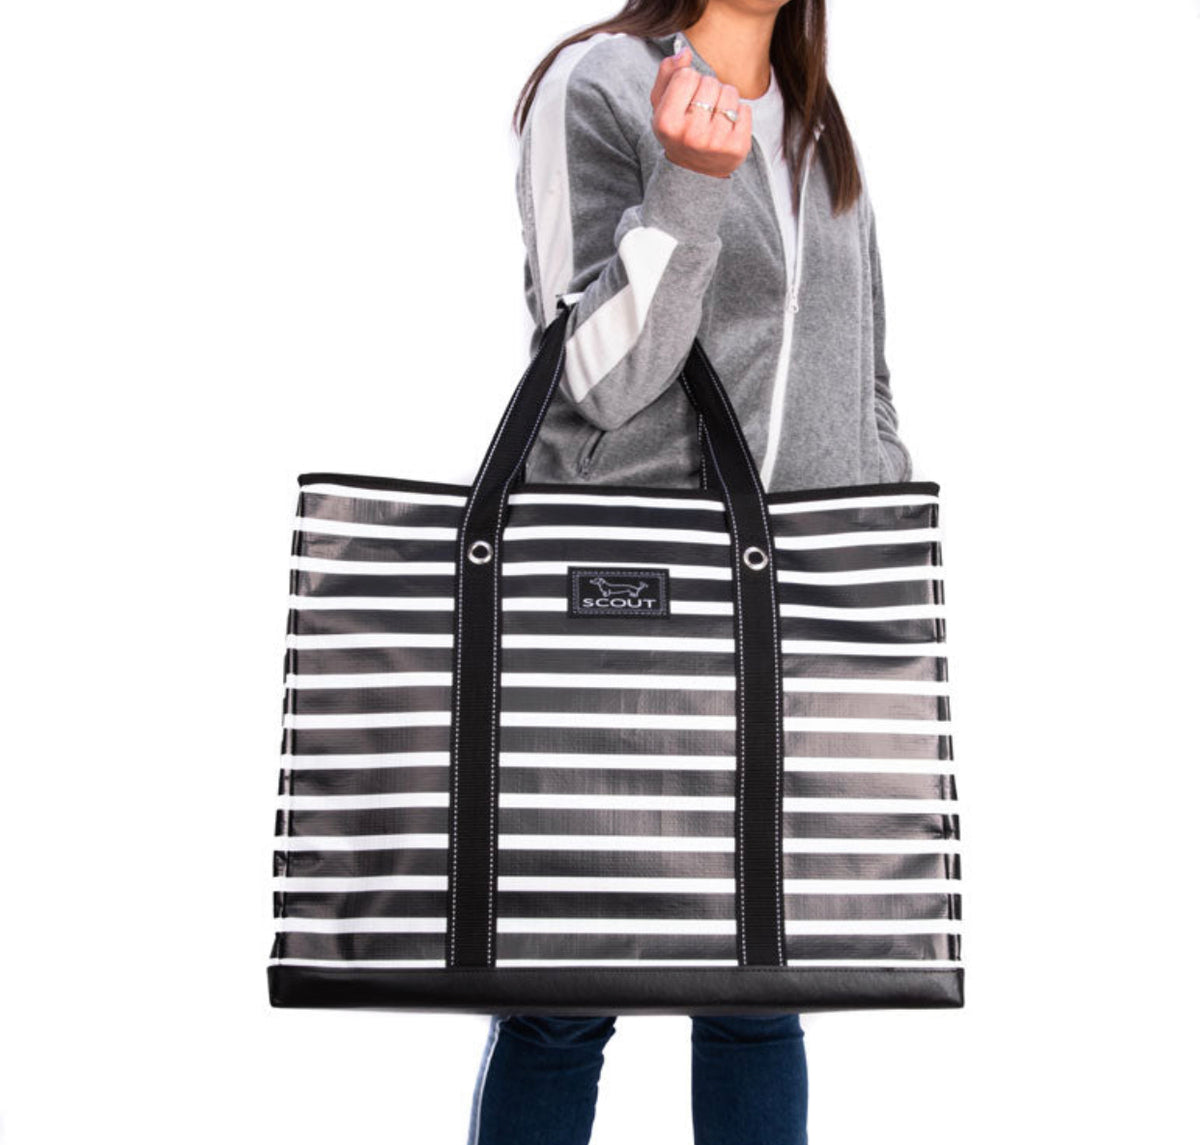  Bella Luna Women's Large Woven Shoulder Tote Handbag